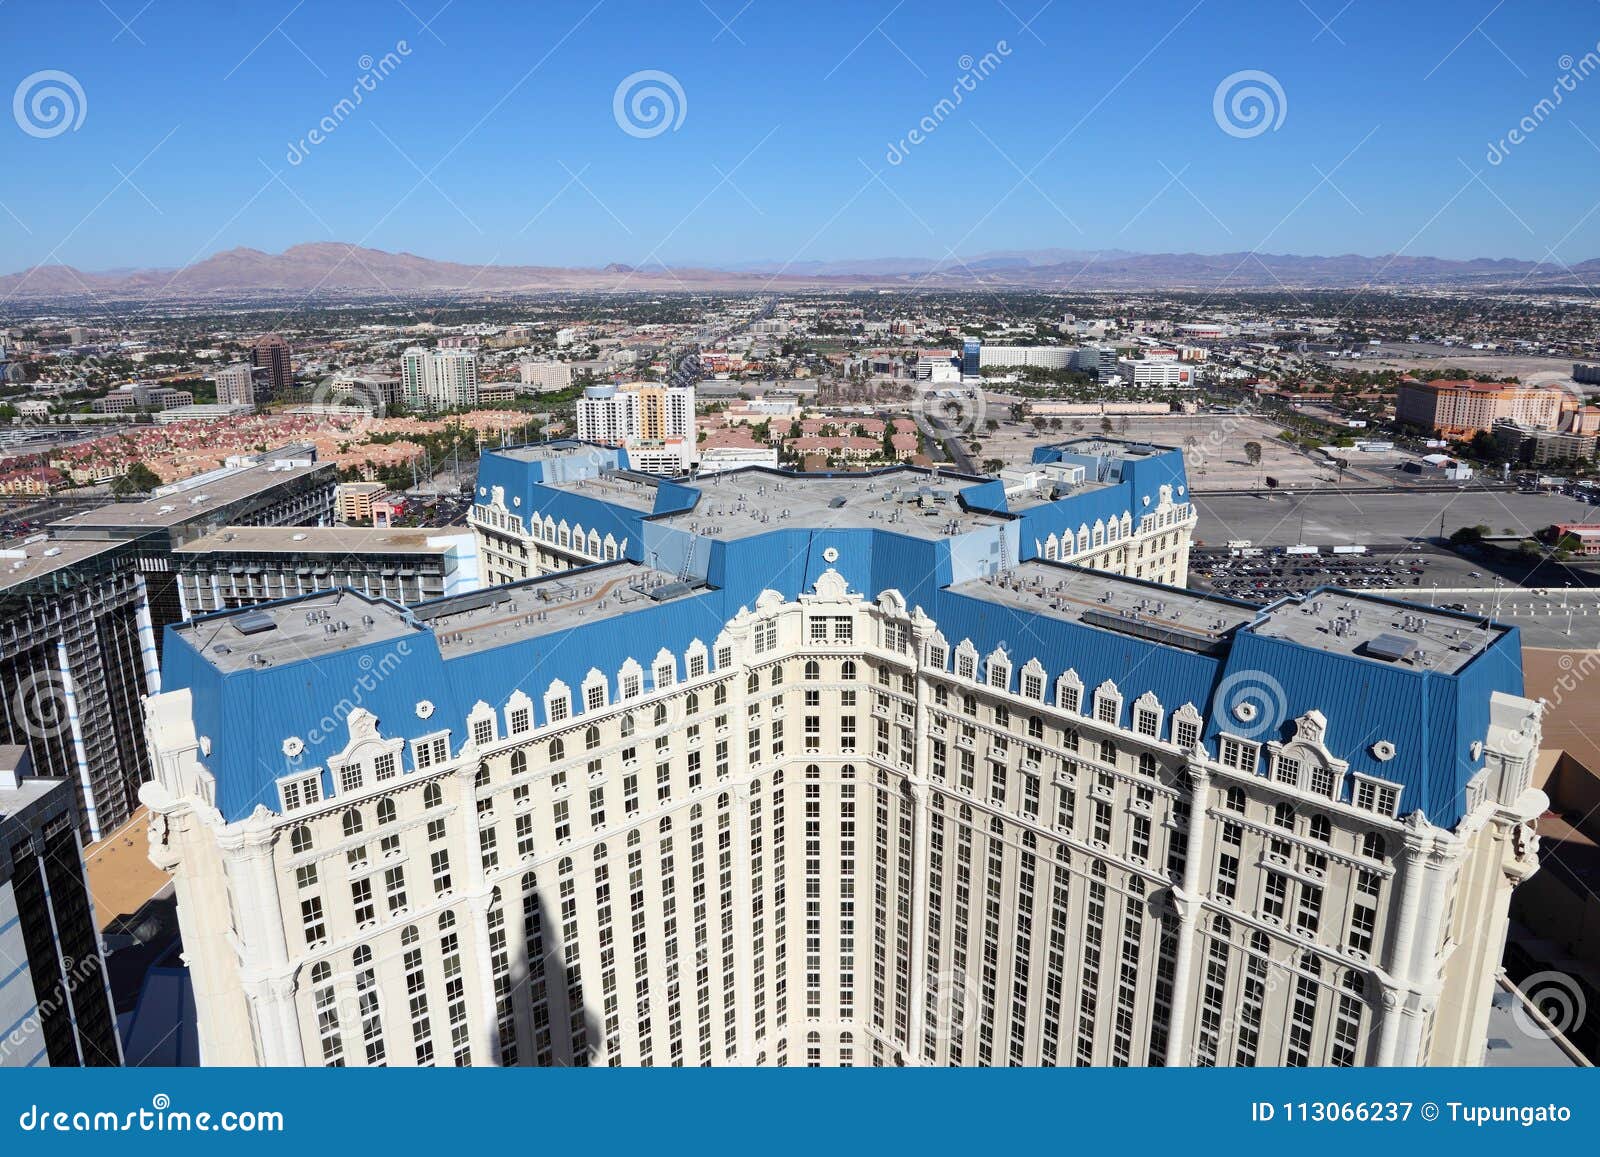 Paris Las Vegas Editorial Photography Image Of Hotel